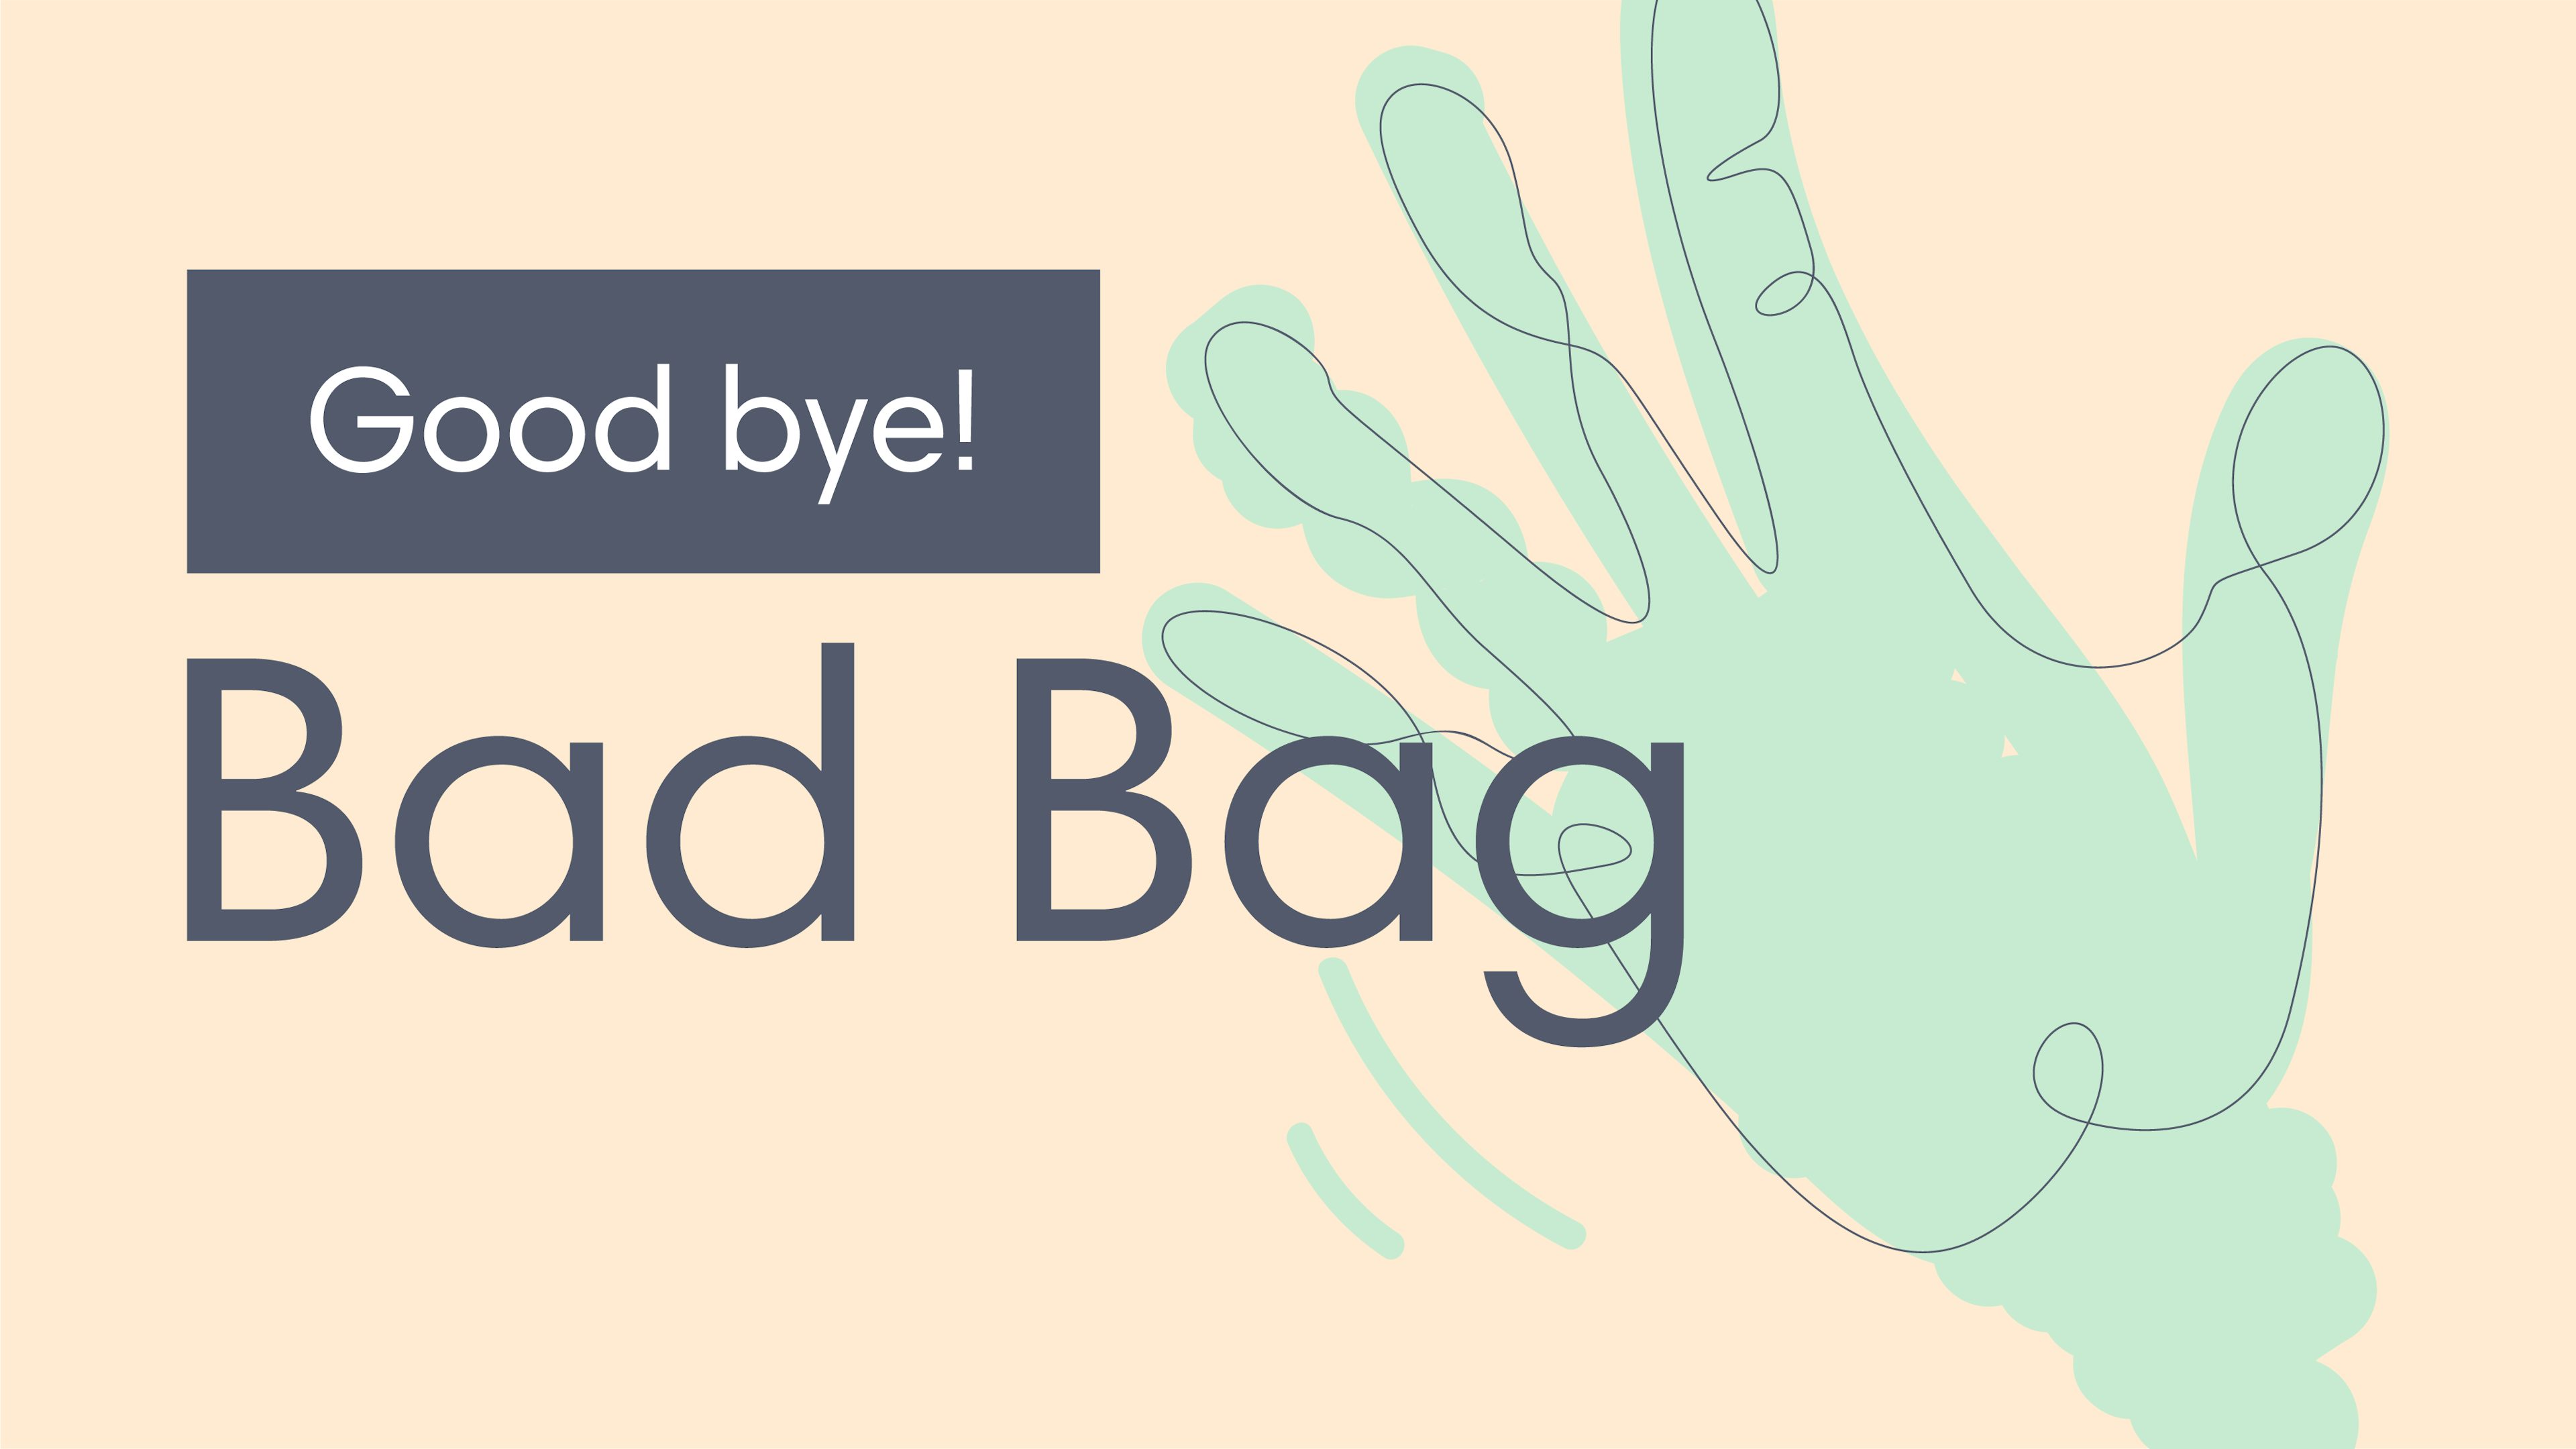 #GoodbyeBadBag Saved 4,220 Plastic Bags this Summer